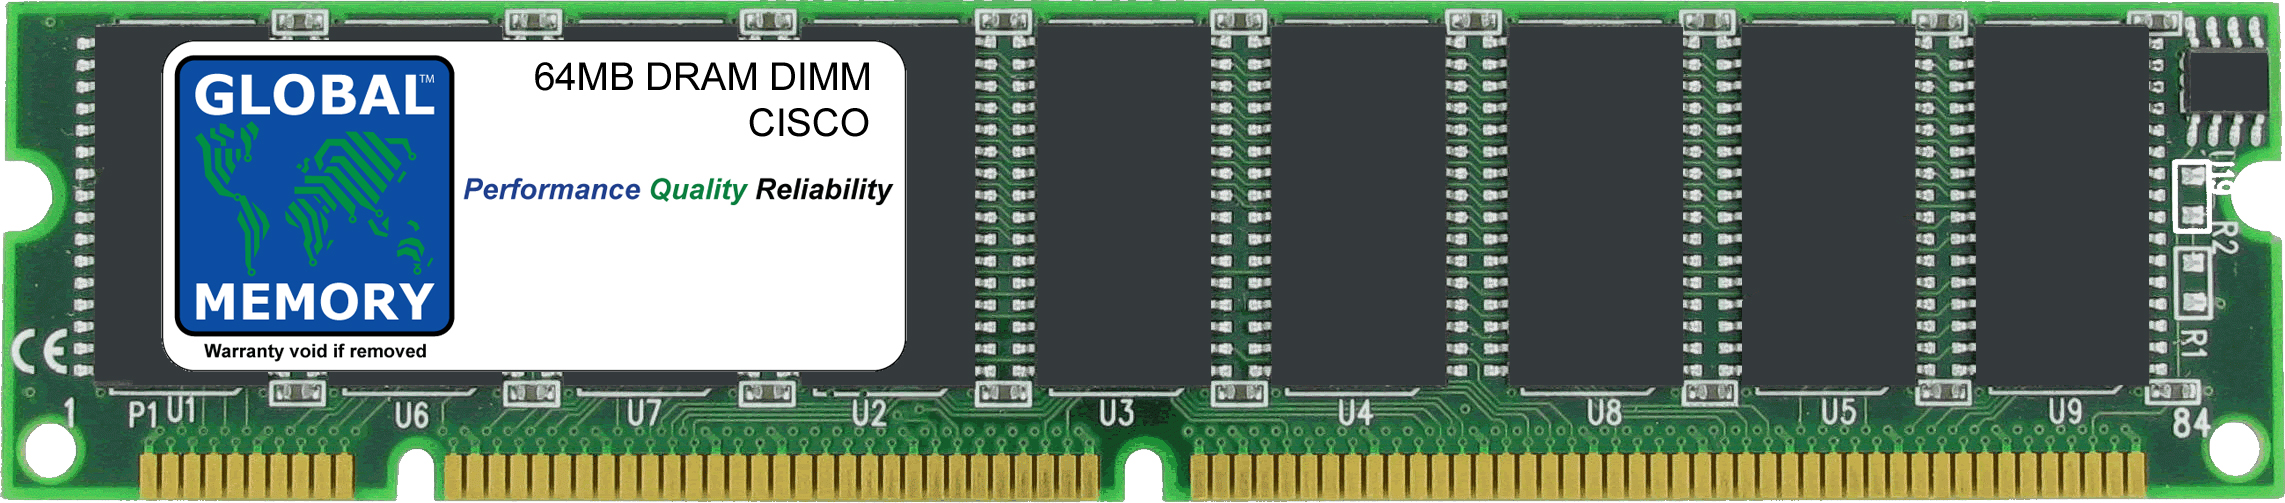 64MB DRAM DIMM MEMORY RAM FOR CISCO 12000 SERIES ROUTERS GRP LINE CARD (MEM-GRP/LC-64)